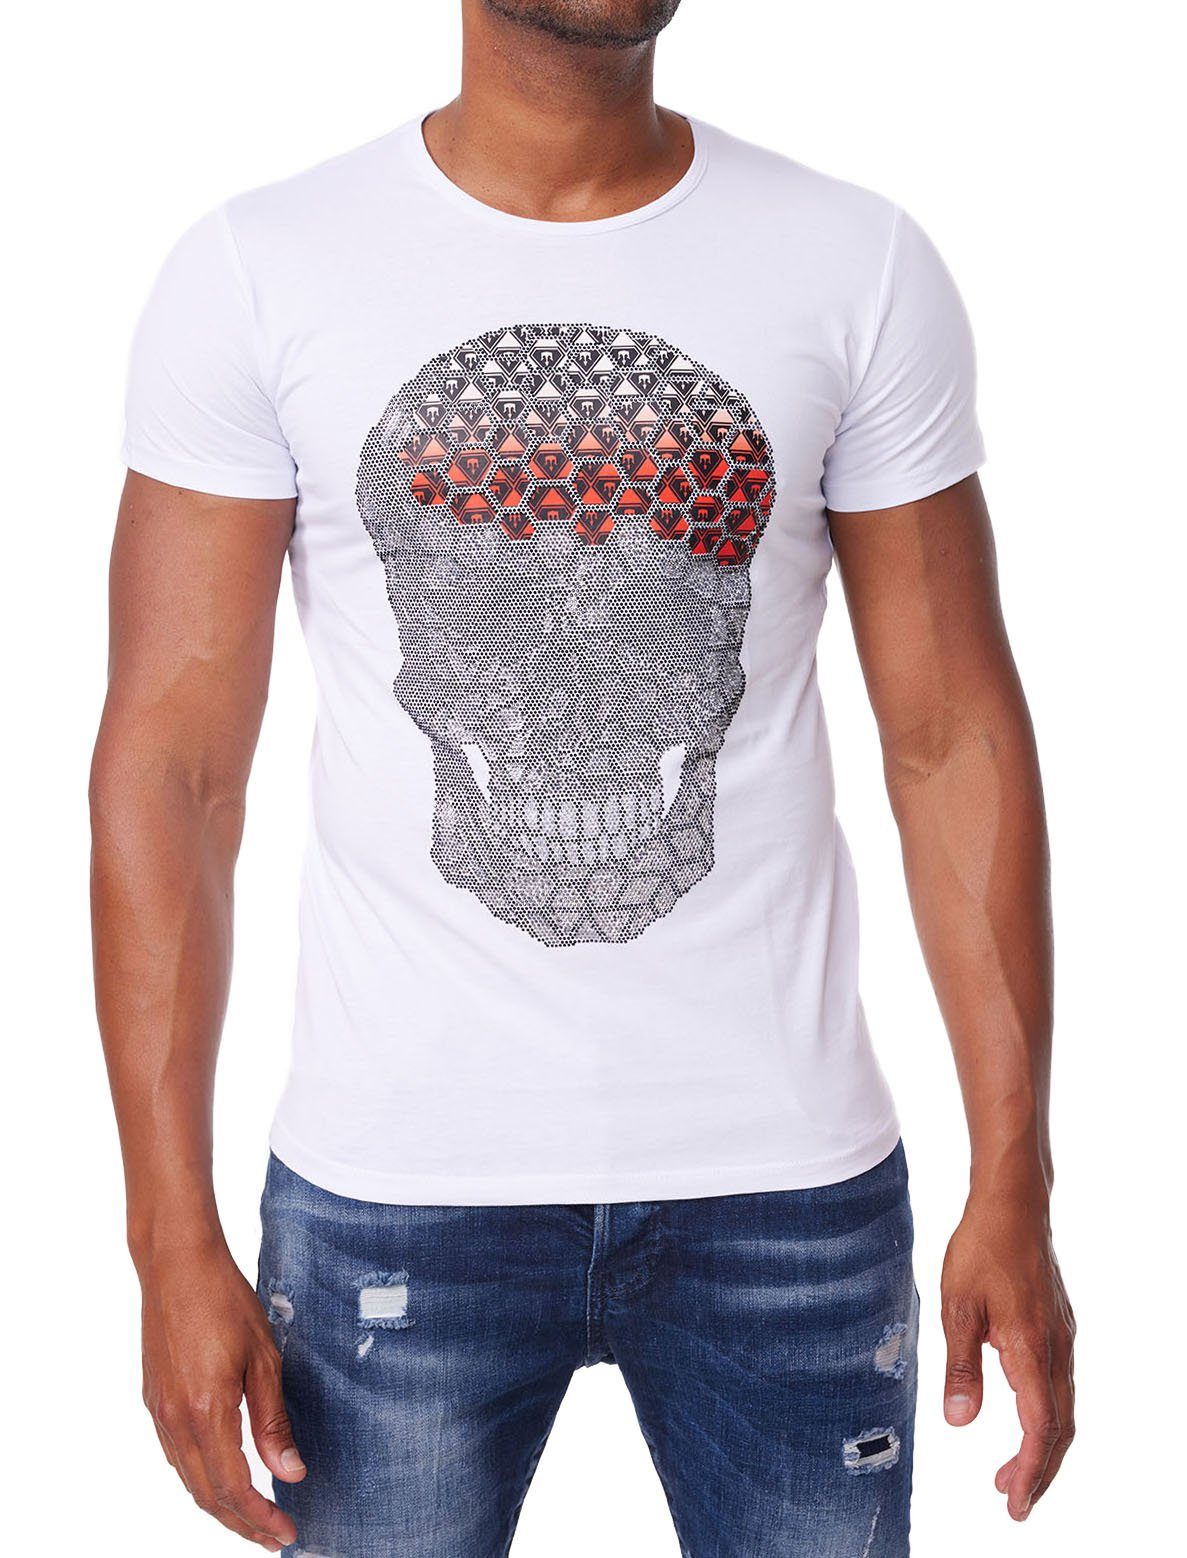 Lässiges Kurzarm mit Herren TRUENO besonderem T-Shirt Totenkopf T-Shirt Motiv